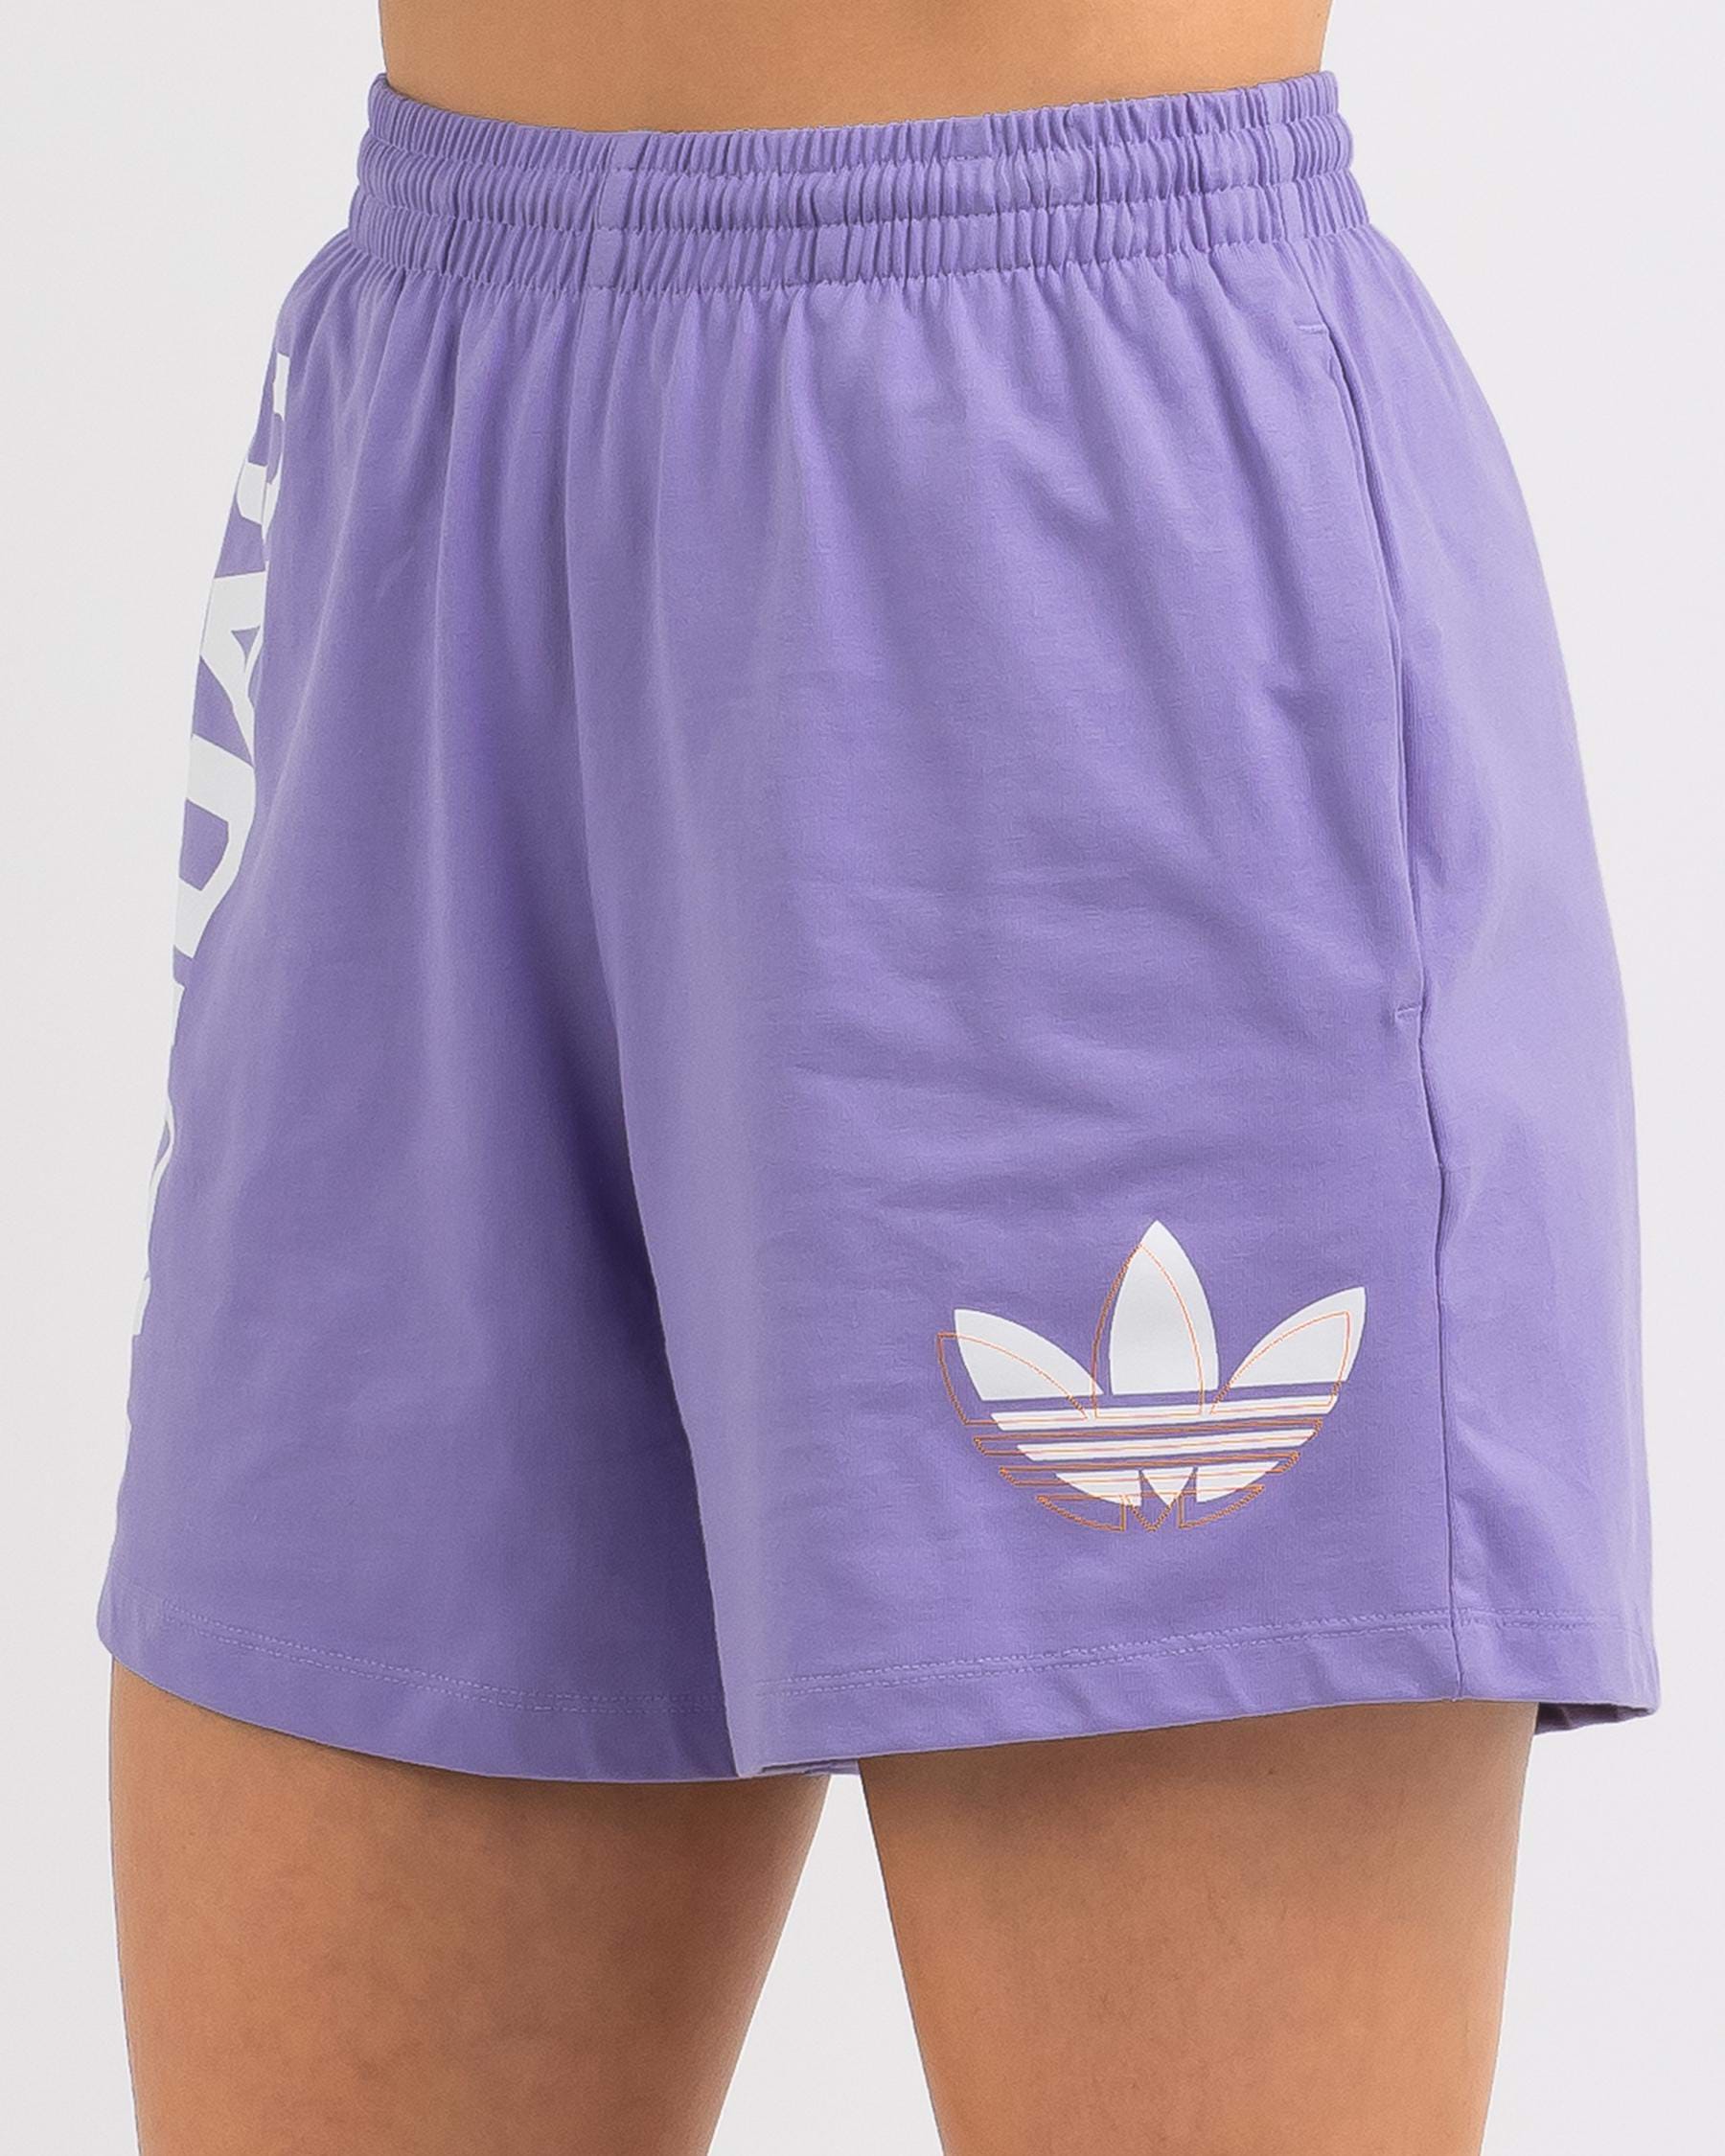 Adidas Originals Shorts In Light Purple | City Beach Australia